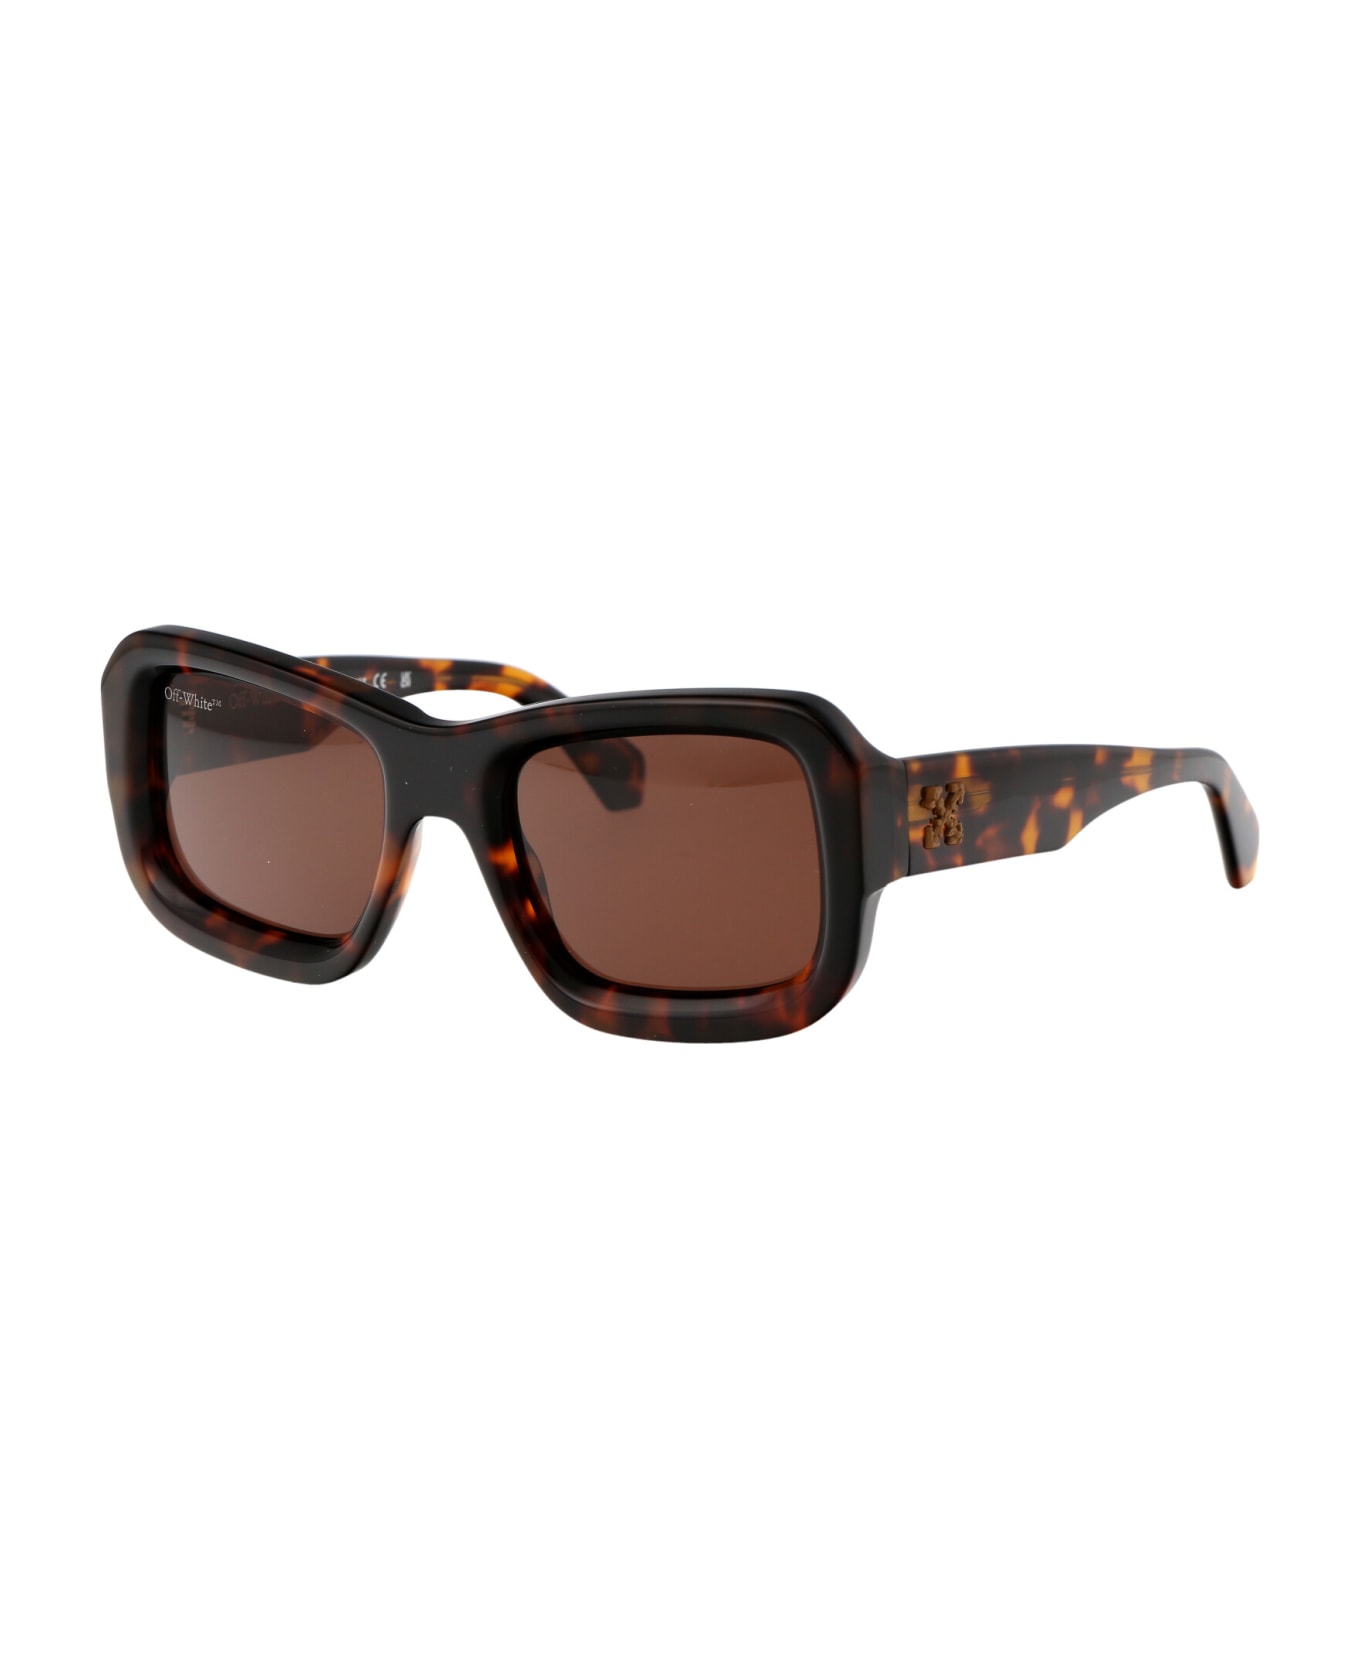 Off-White Verona Sunglasses - 6064 HAVANA サングラス